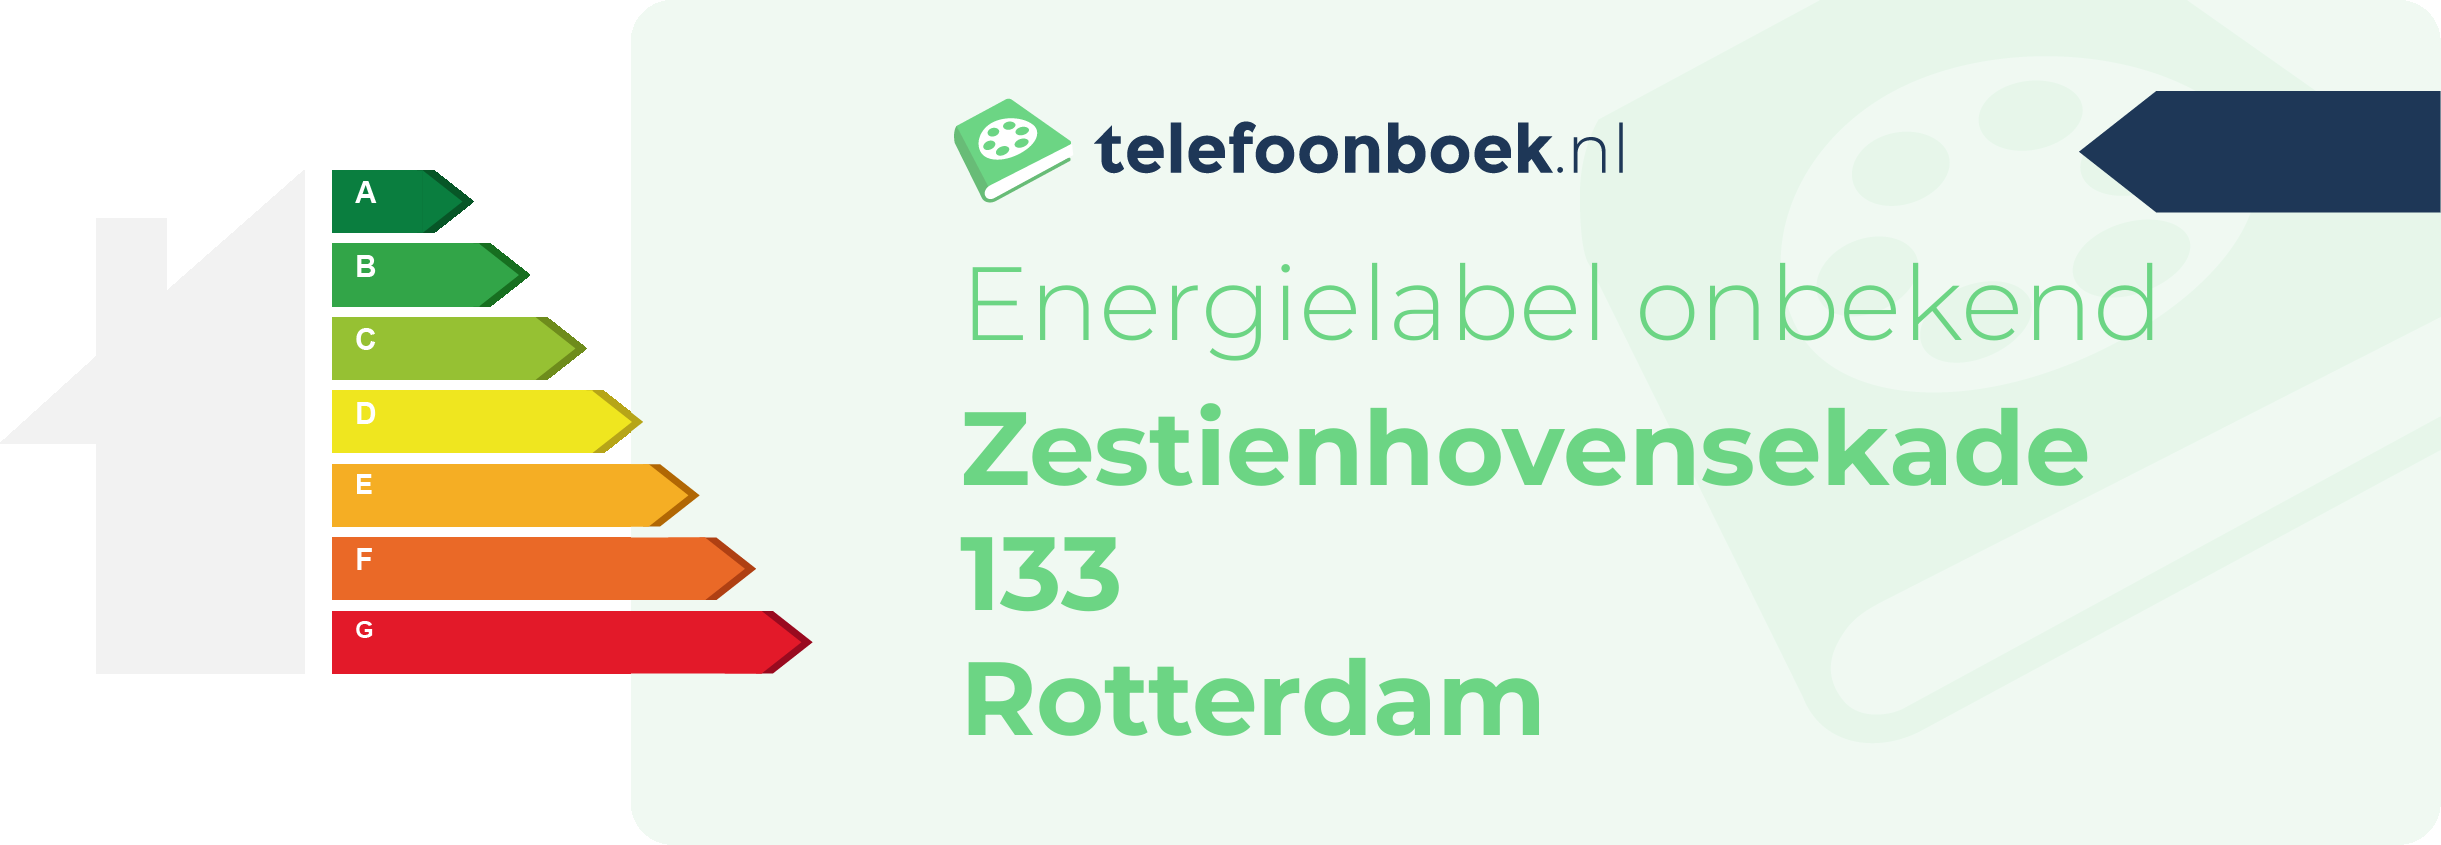 Energielabel Zestienhovensekade 133 Rotterdam